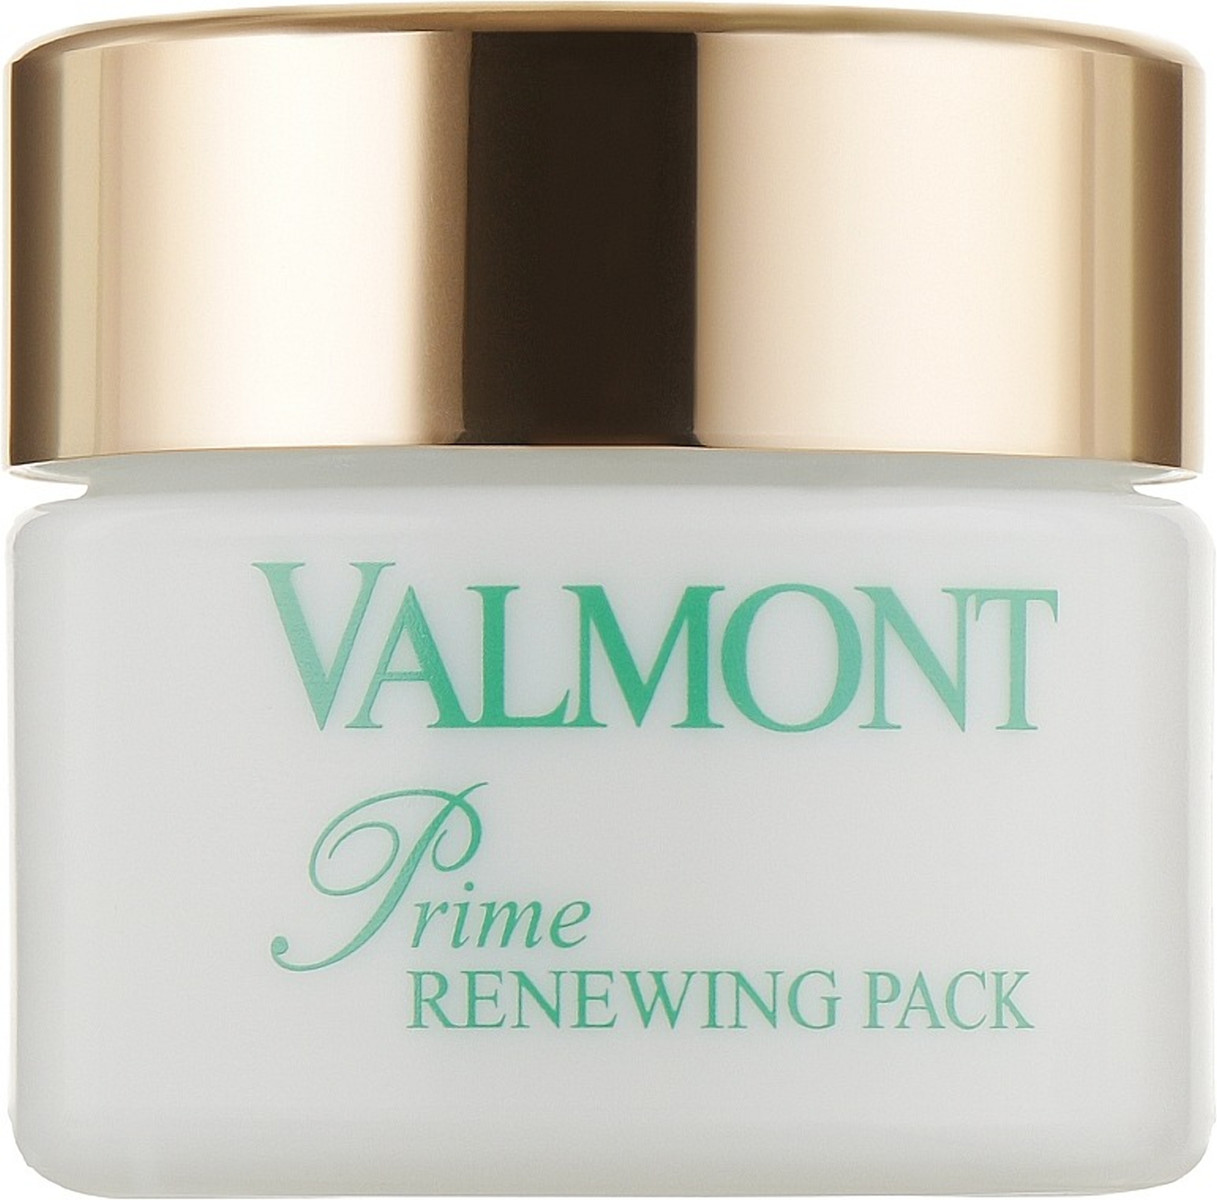 Valmont маска золушки. Valmont Purifying Pack маска. Маска Золушки Valmont 15 мл. Valmont маска Золушки купить. Valmont маска Золушки отзывы.